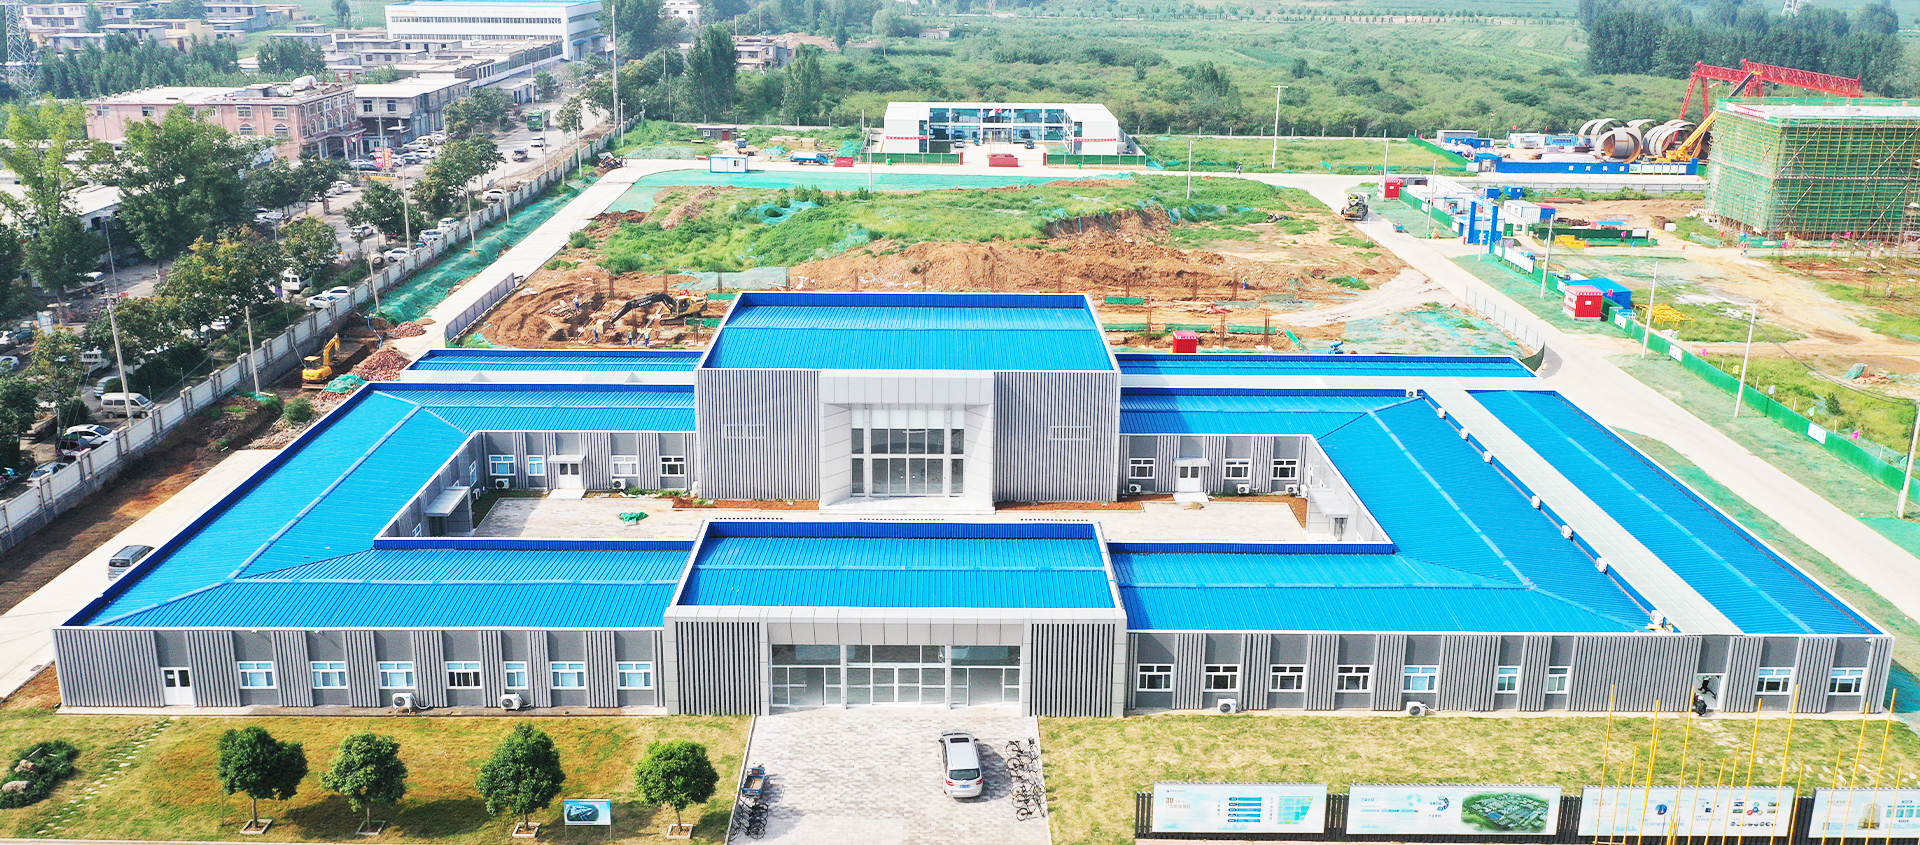 Projekt skupine Shandong Yankuang 300.000 ton/leto kaprolaktama